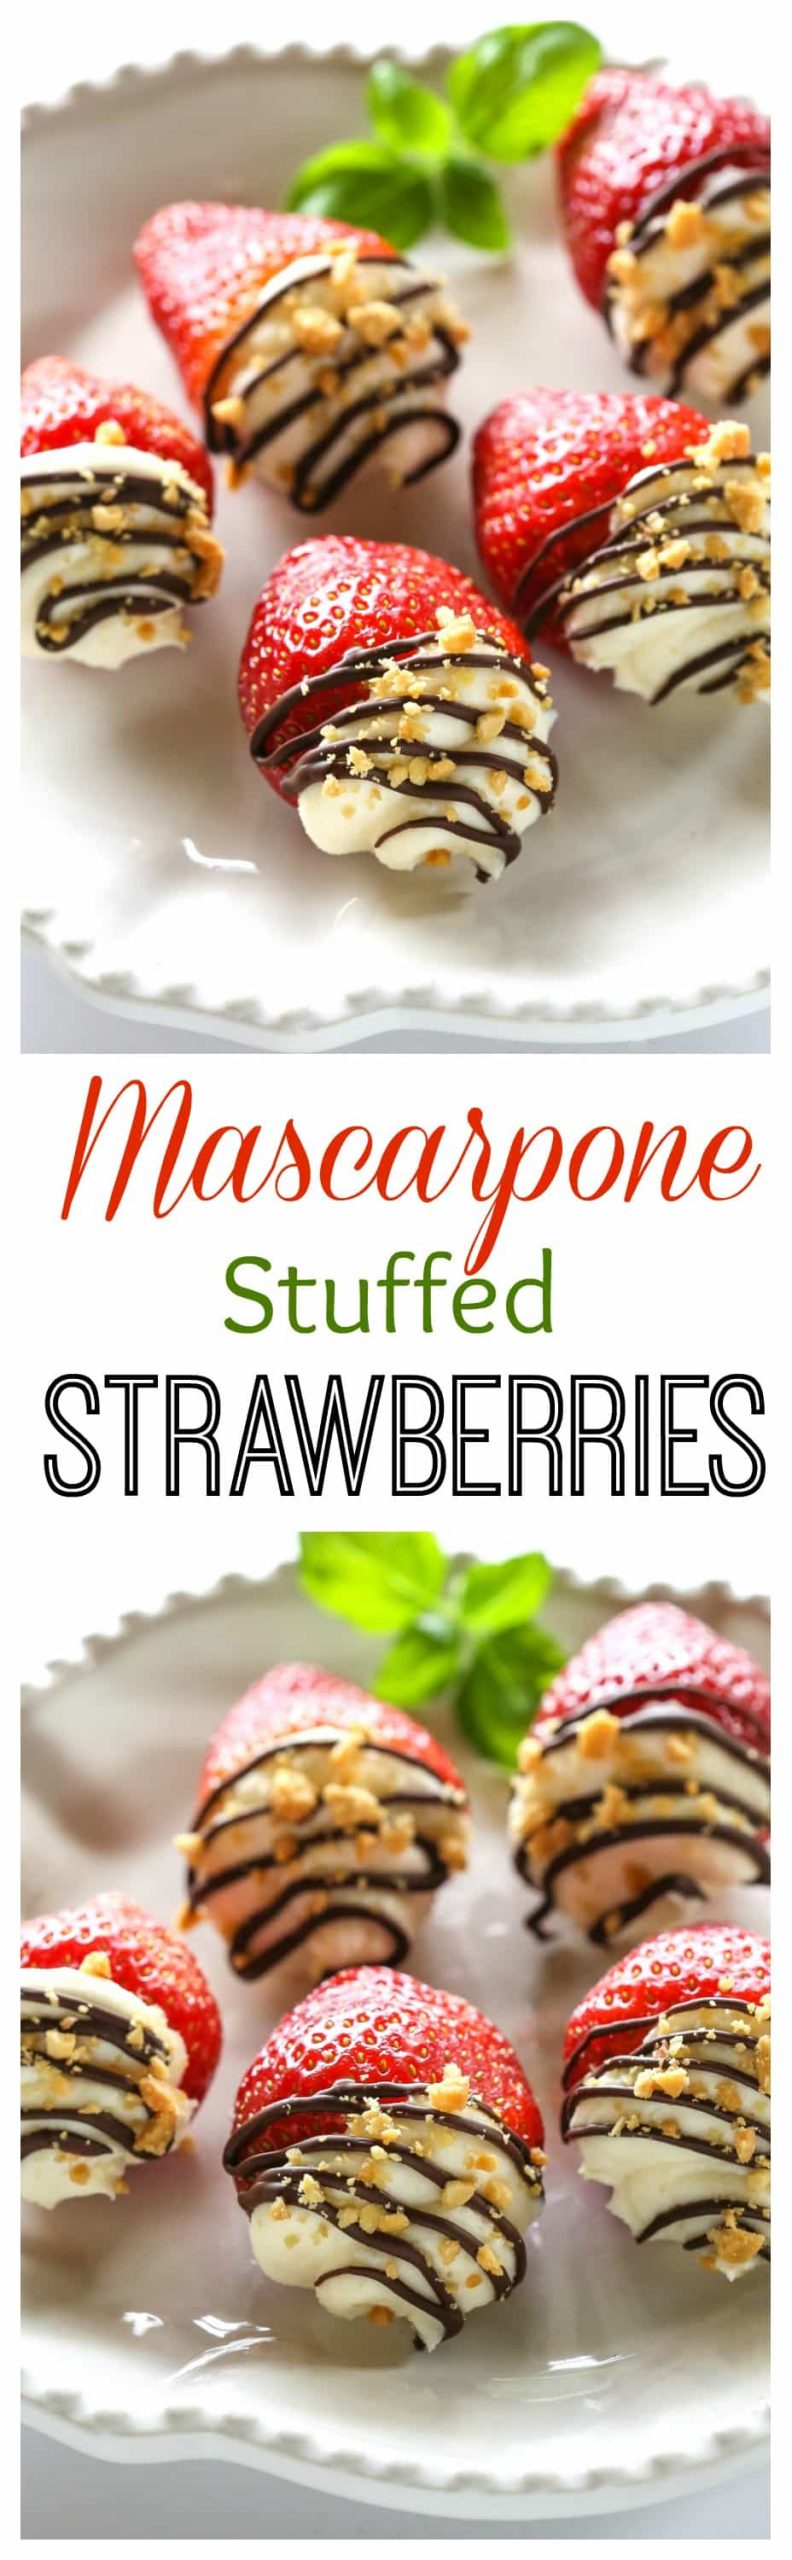 Mascarpone Stuffed Strawberrries. Sweet and silky mascarpone filled strawberries drizzled with chocolate and nuts. #healthy #dessert #strawberry #mascarpone